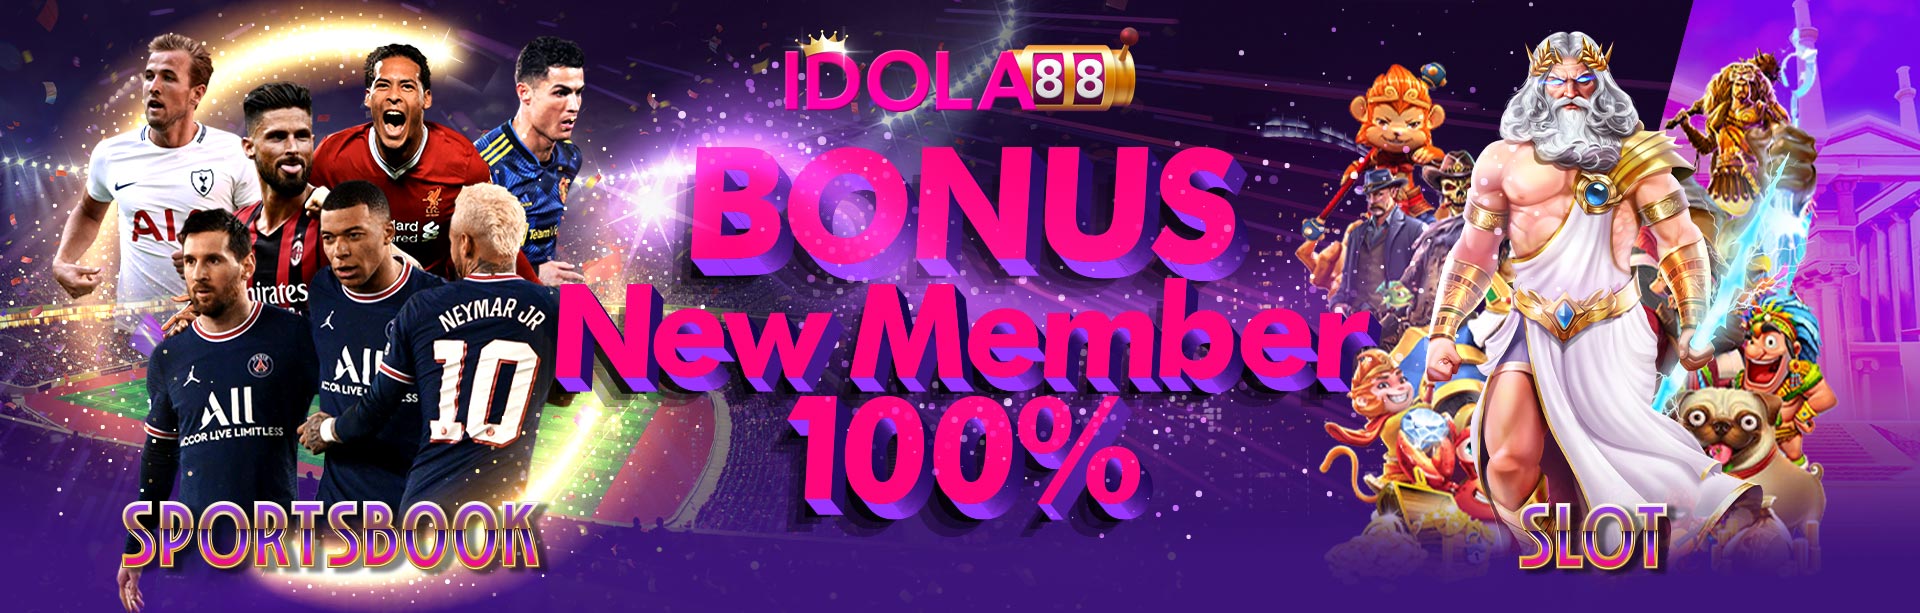 New member 100%